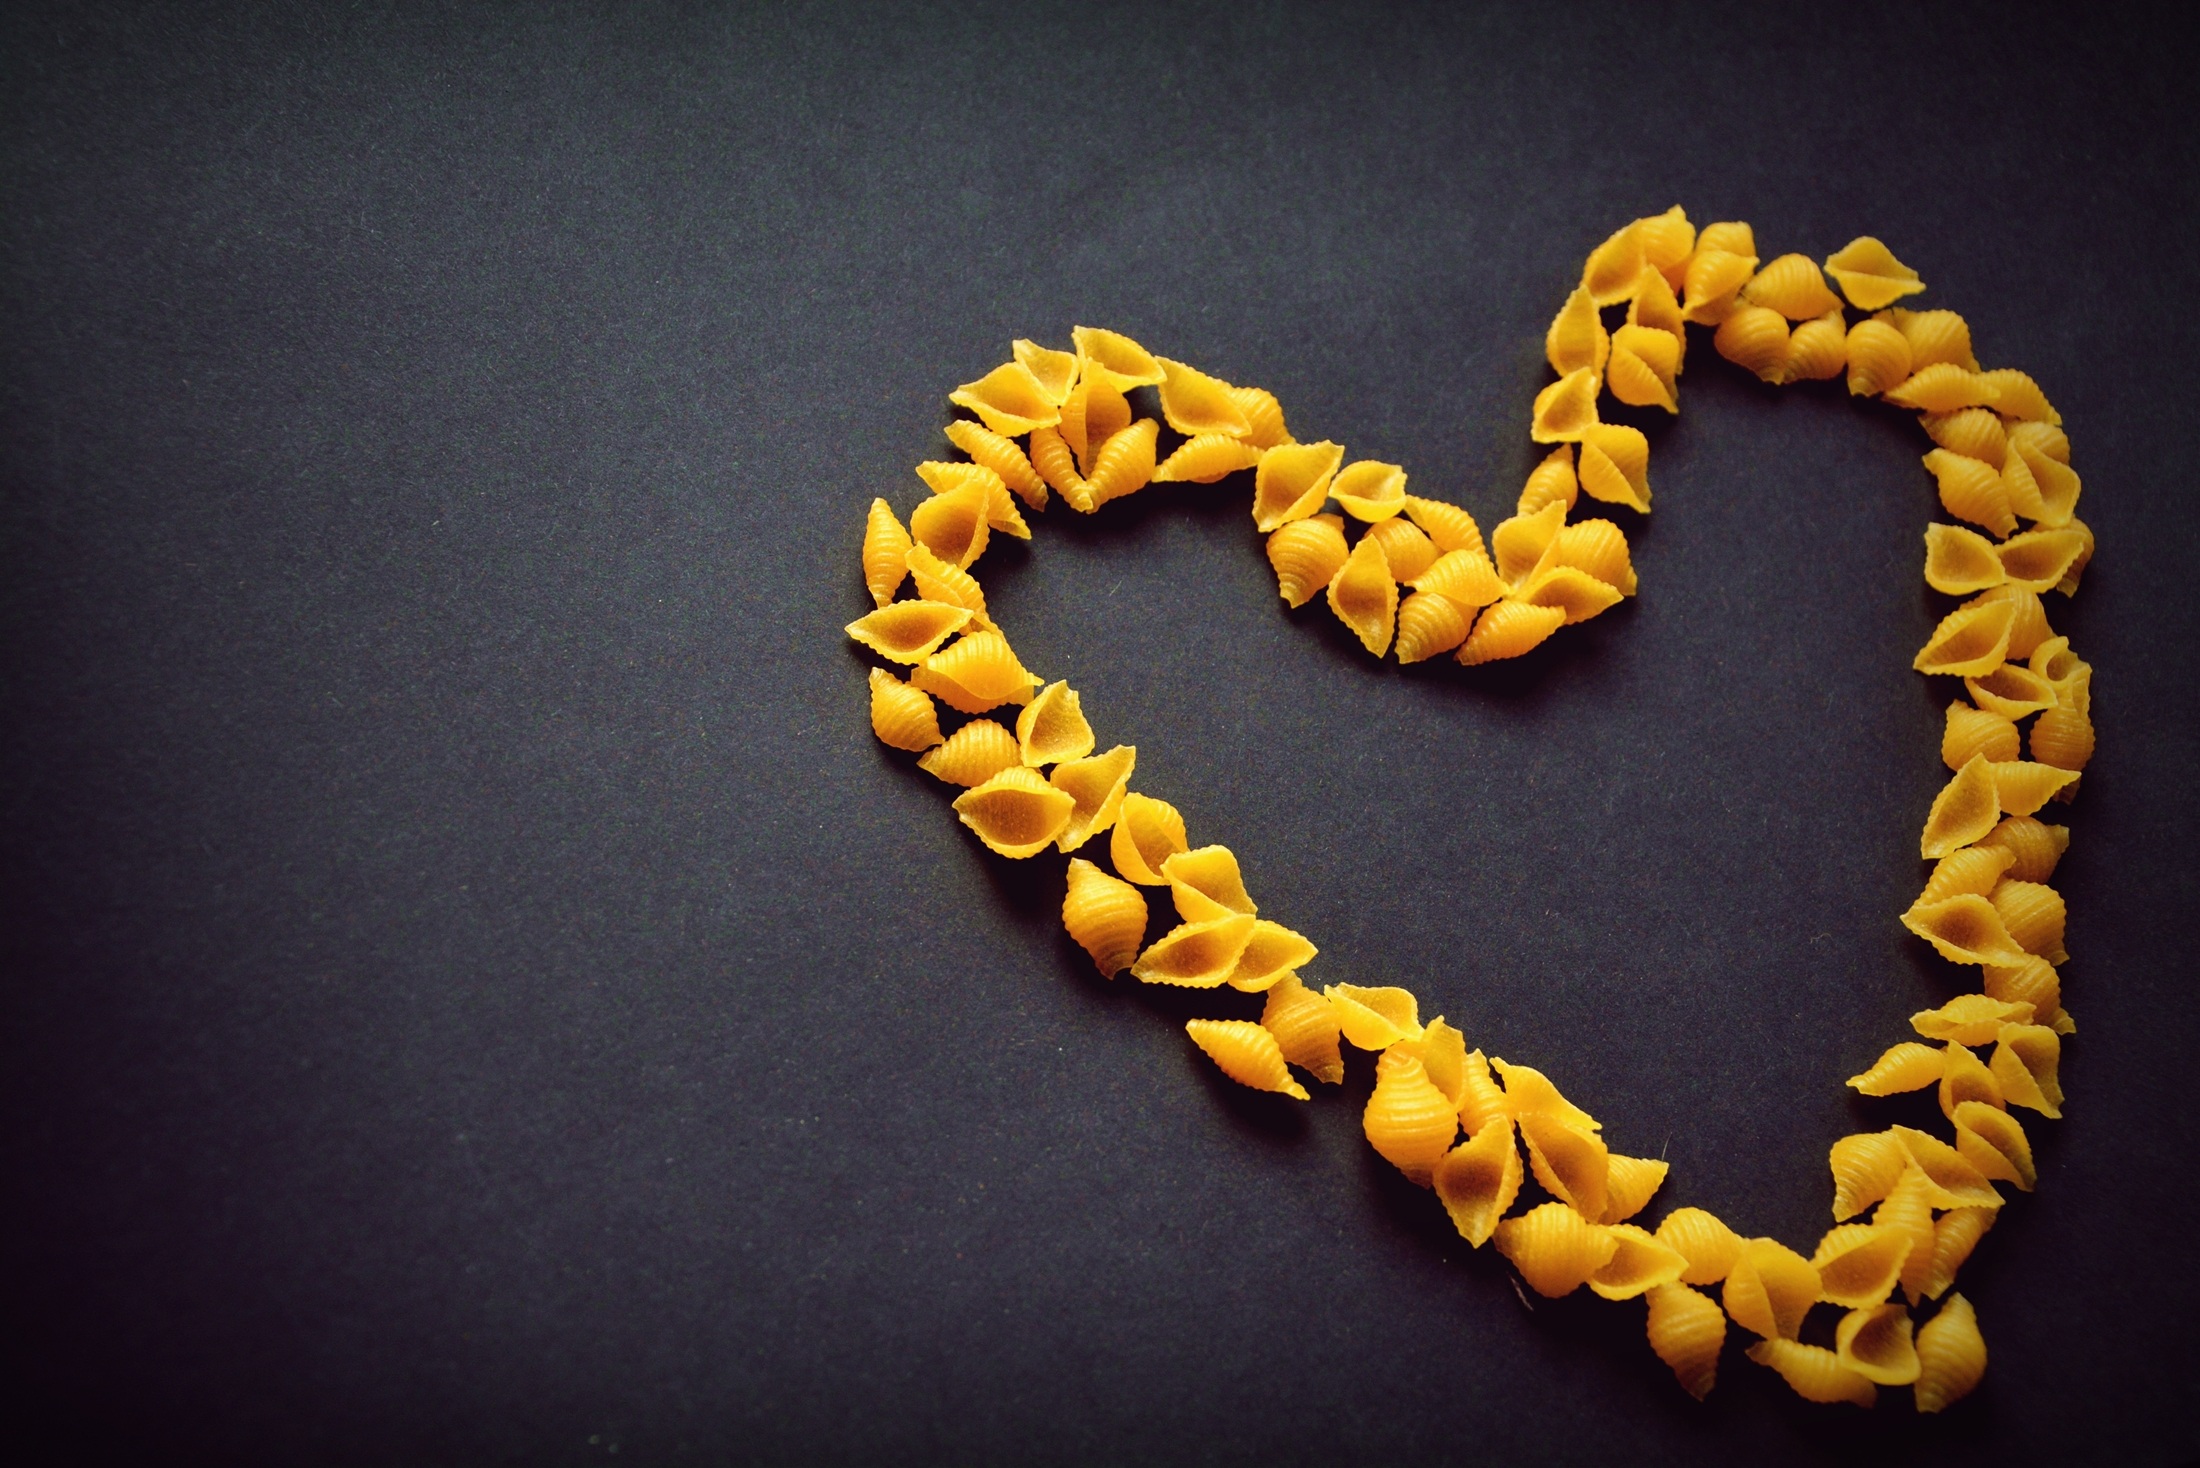 chain-number-heart-food-symbol-yellow-pasta-circle-necklace-bracelet-jewellery-font-art-fashion-accessory-620086.jpeg